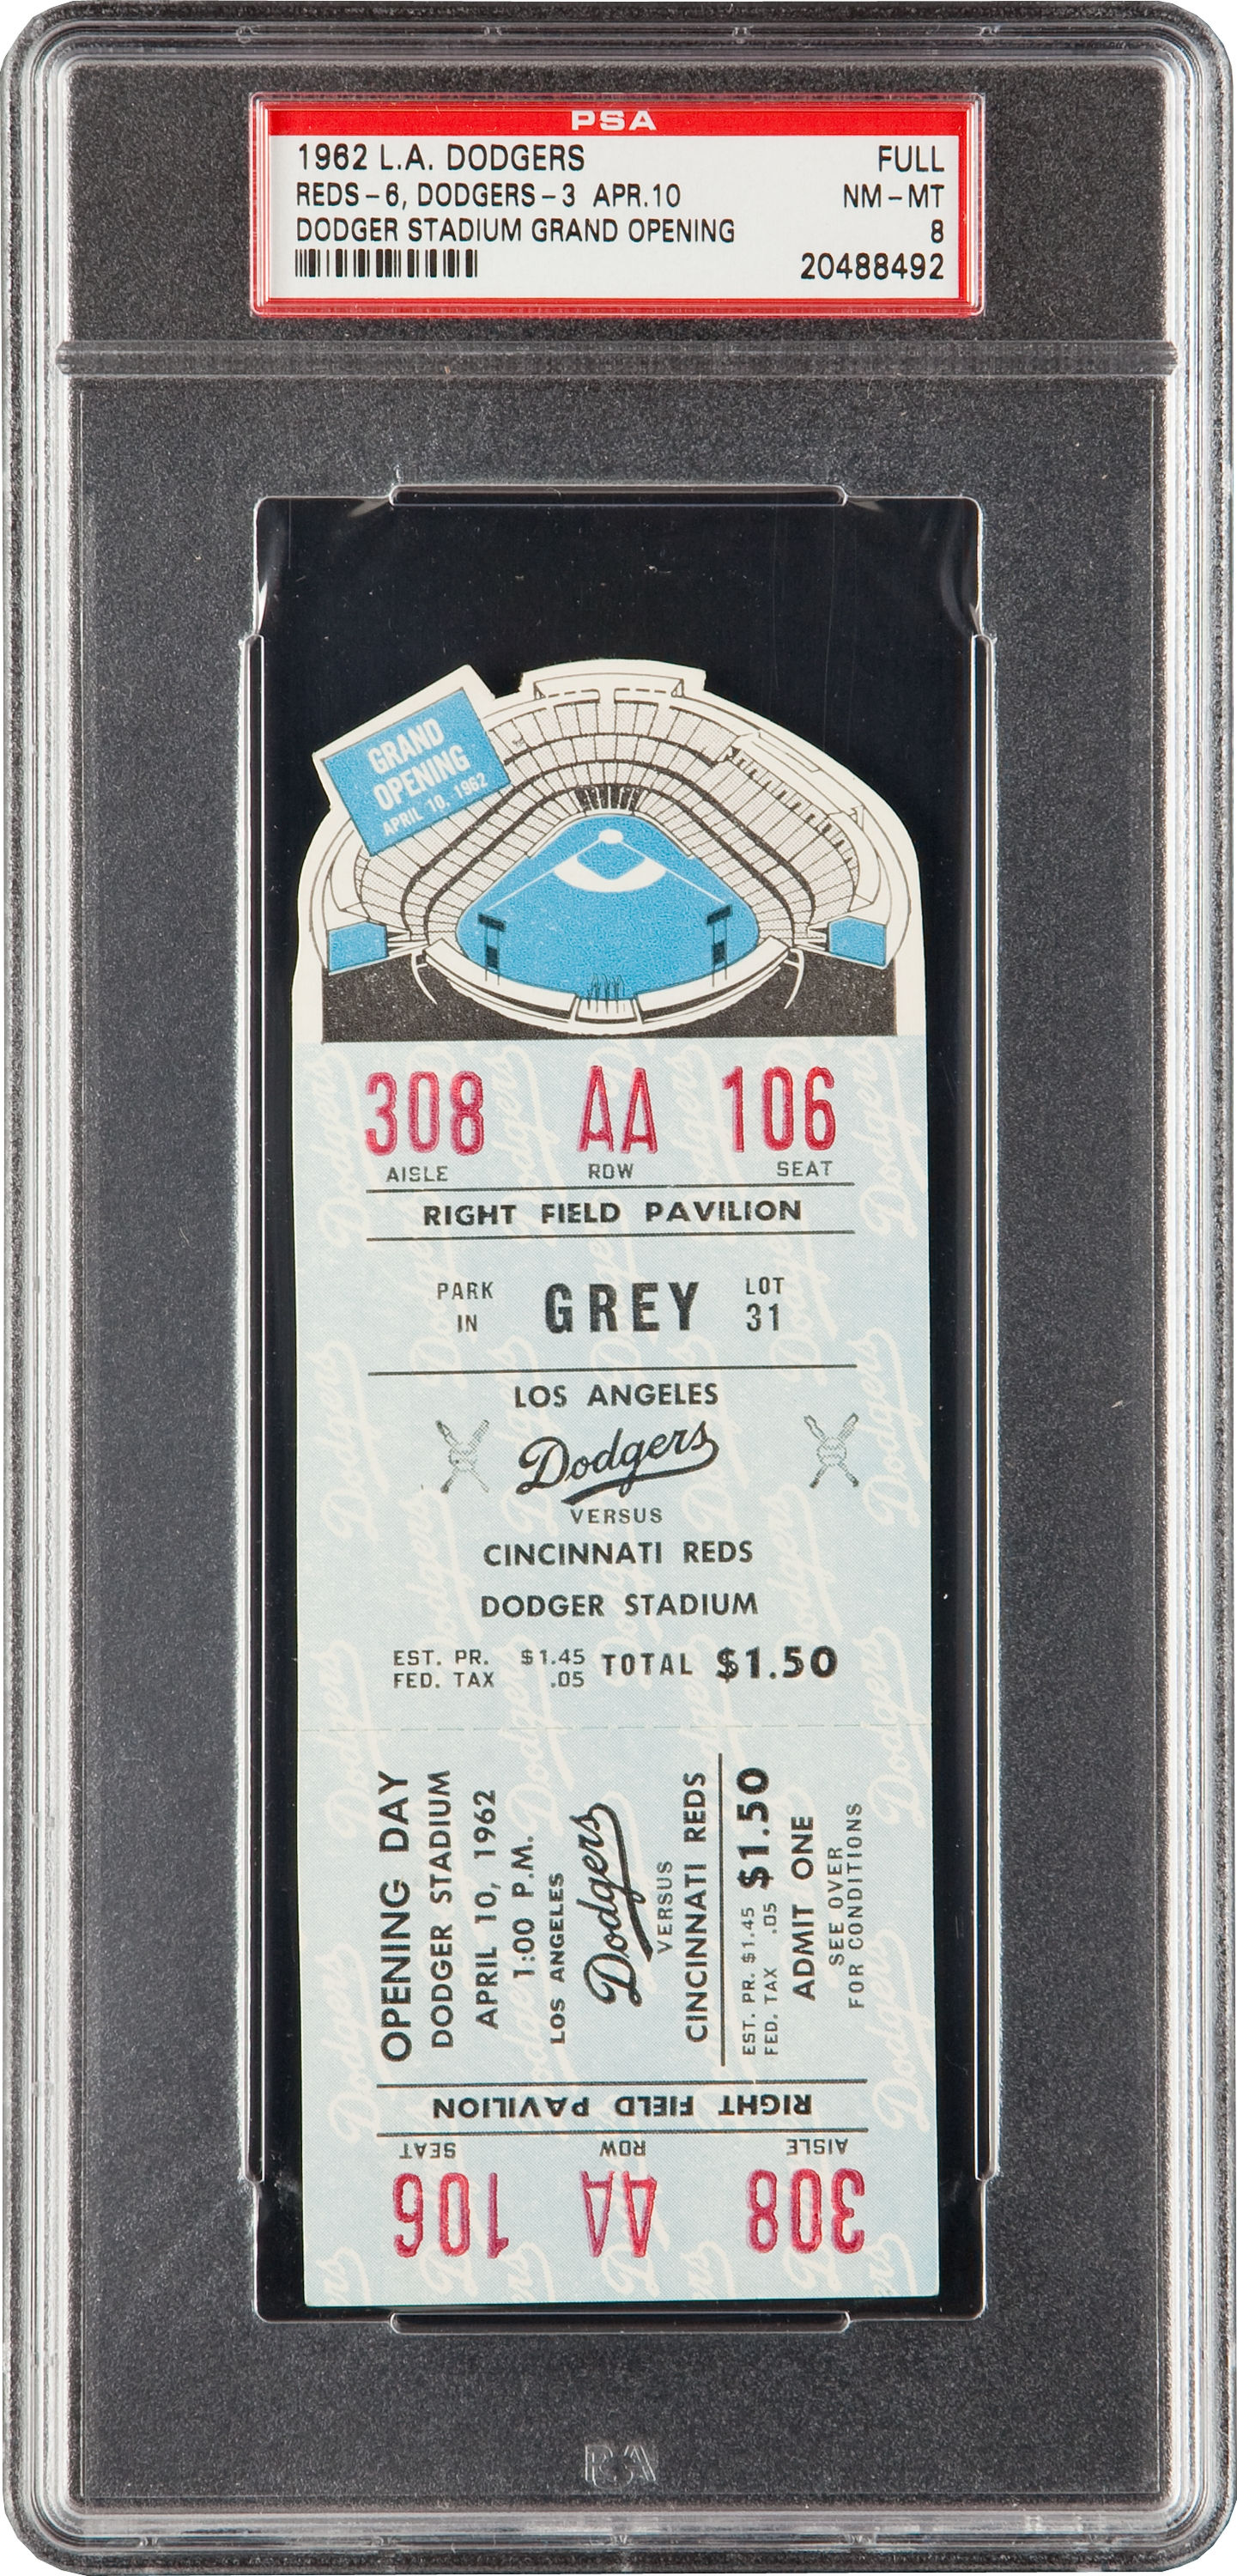 1962 Los Angeles Dodgers Stadium Grand Opening Full Ticket., Lot #82986